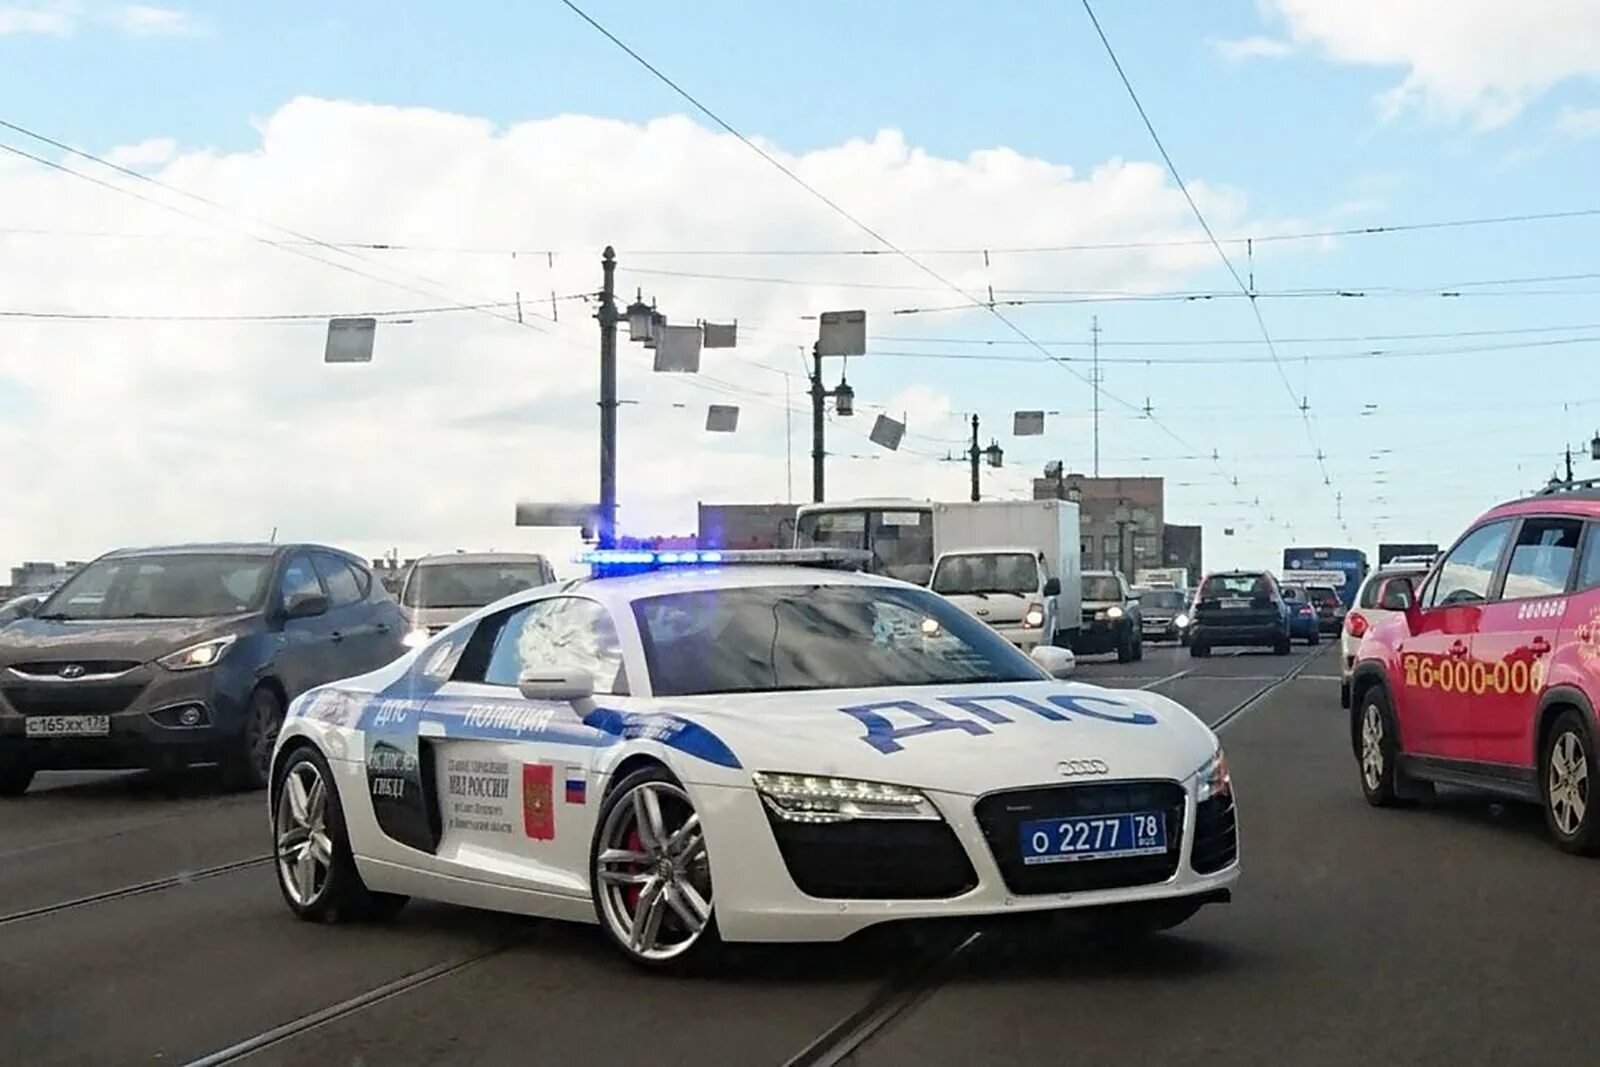 Ауди р8 ДПС. Ауди р8 полиция Питер. Audi r8 ДПС Санкт-Петербург. Audi r8 СПБ ДПС. Дпс питера